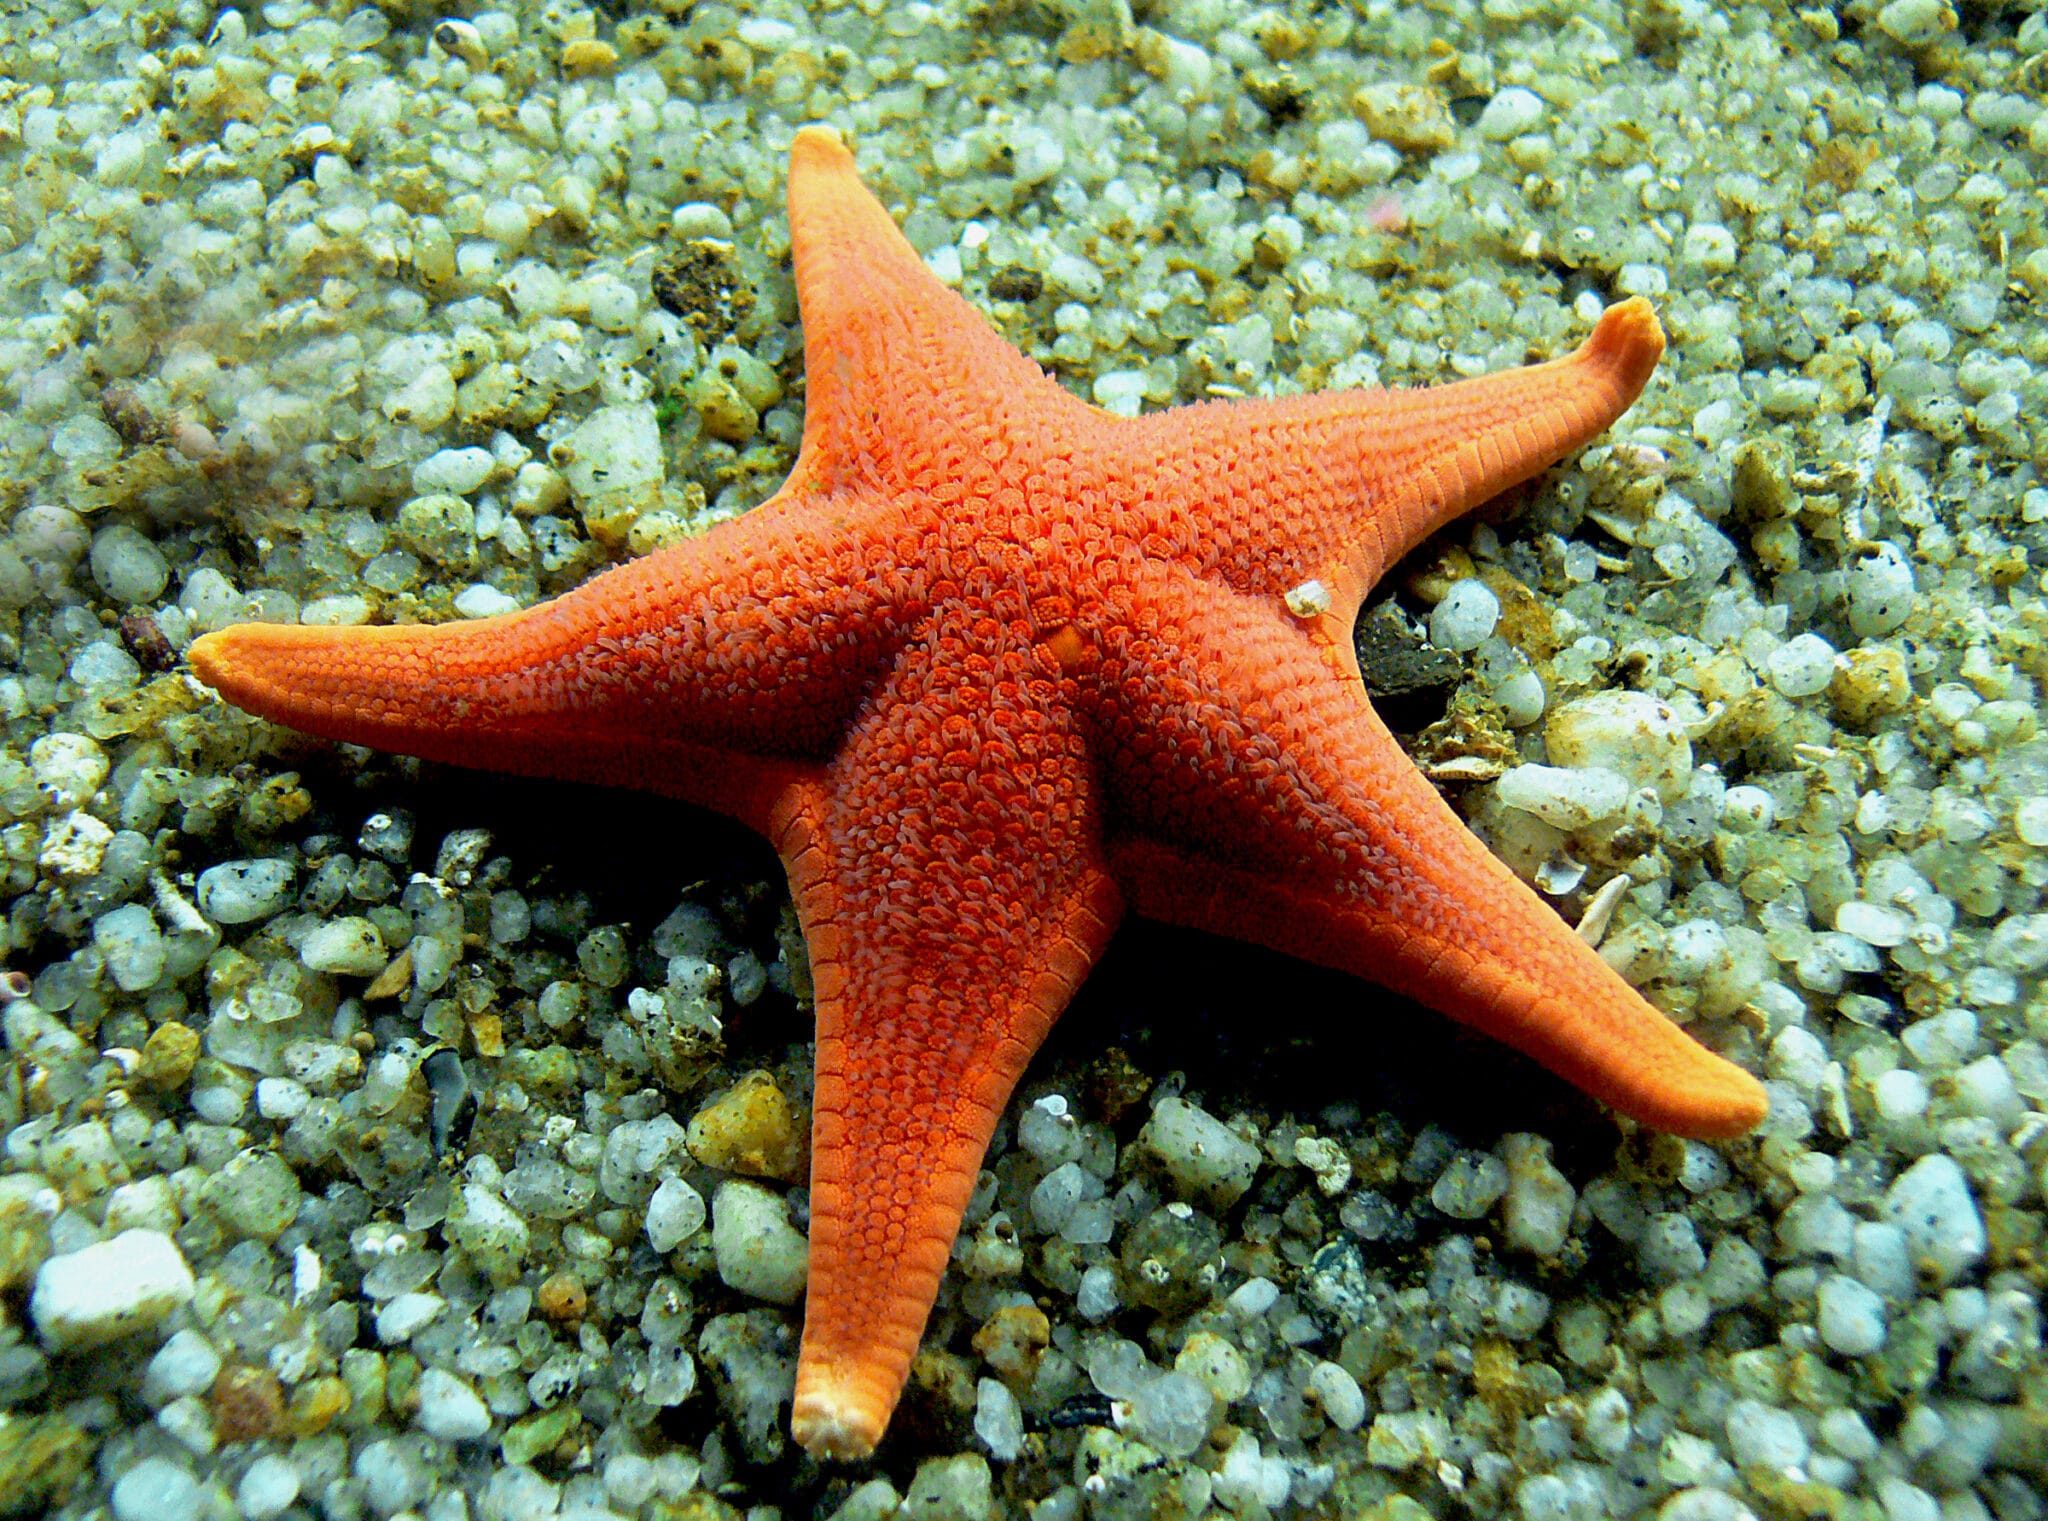  Are Starfish Alive